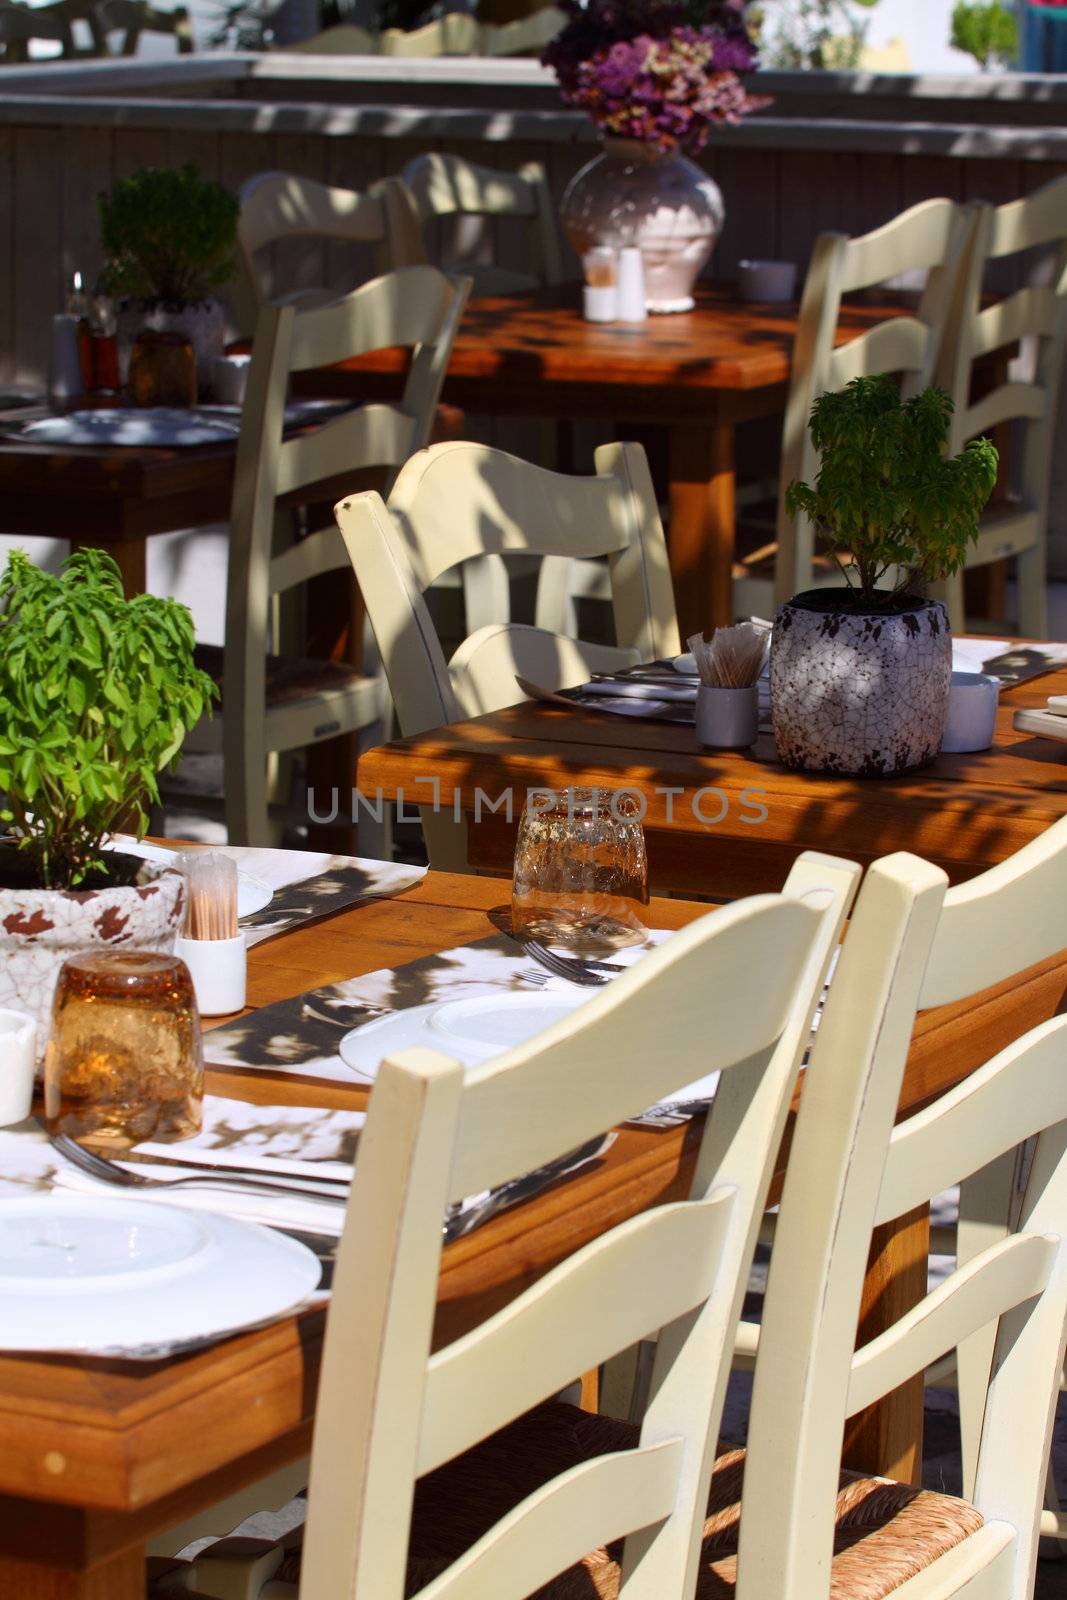 Cafe setting in the greek islands by mariusz_prusaczyk